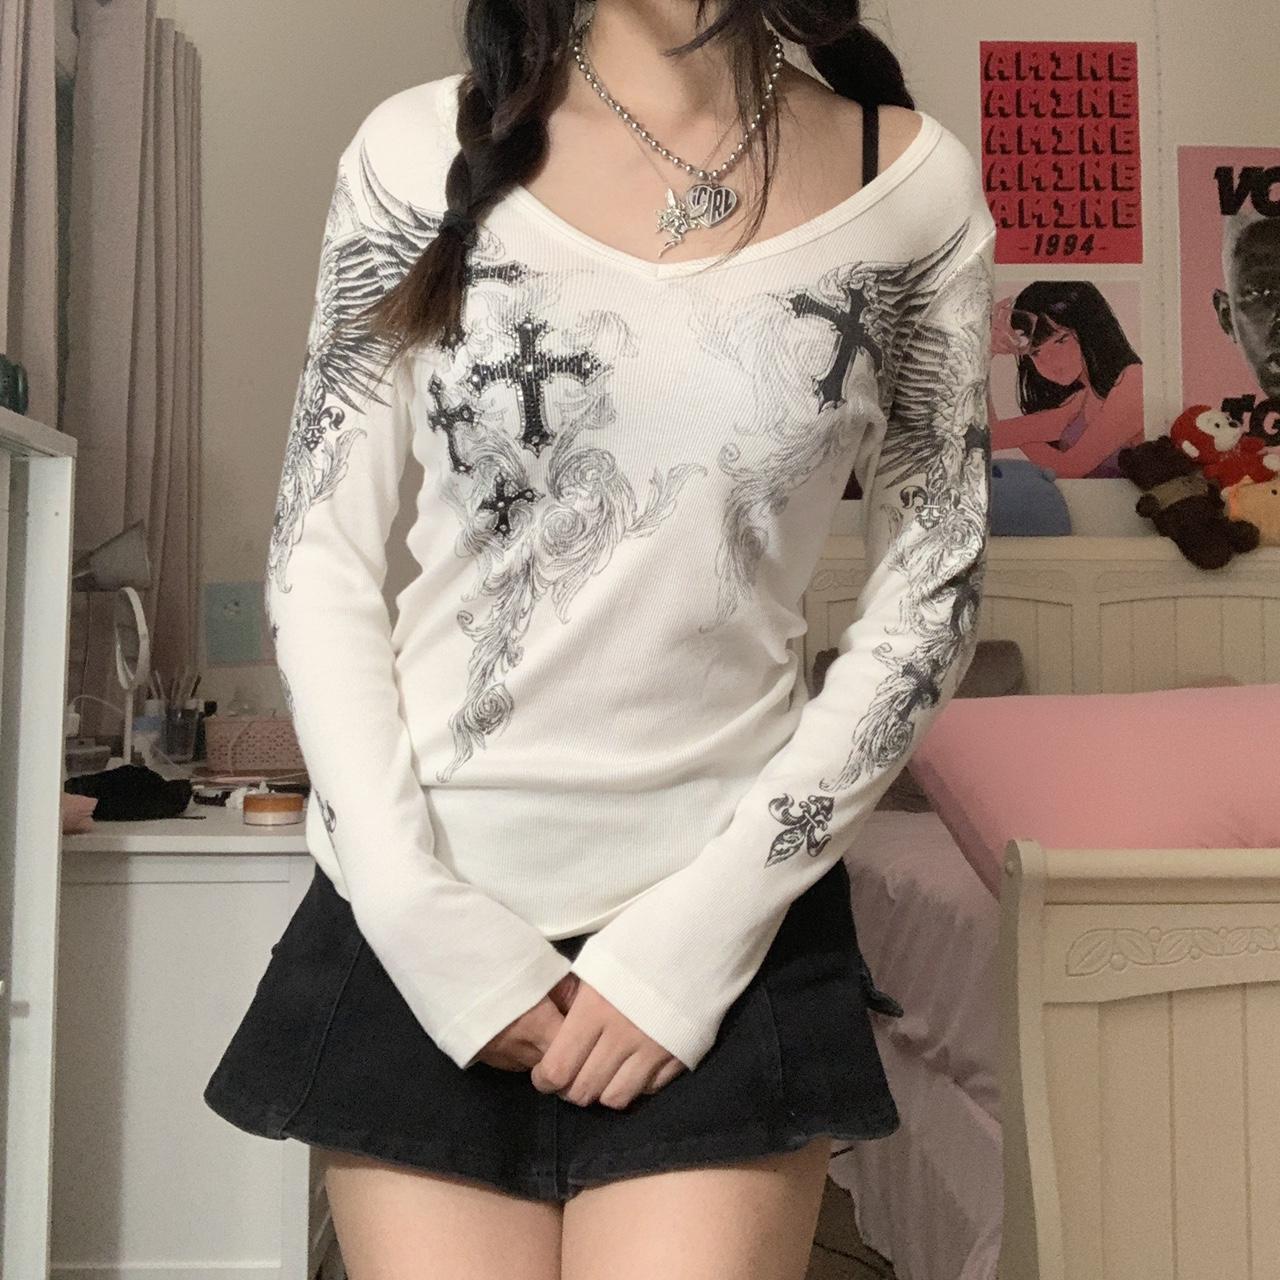 Mojoyce  Harajuku White T-Shirts Aesthetic Printed Long Sleeve Crop Top Dark Academia Tee Autumn Grunge Vintage Tops Women